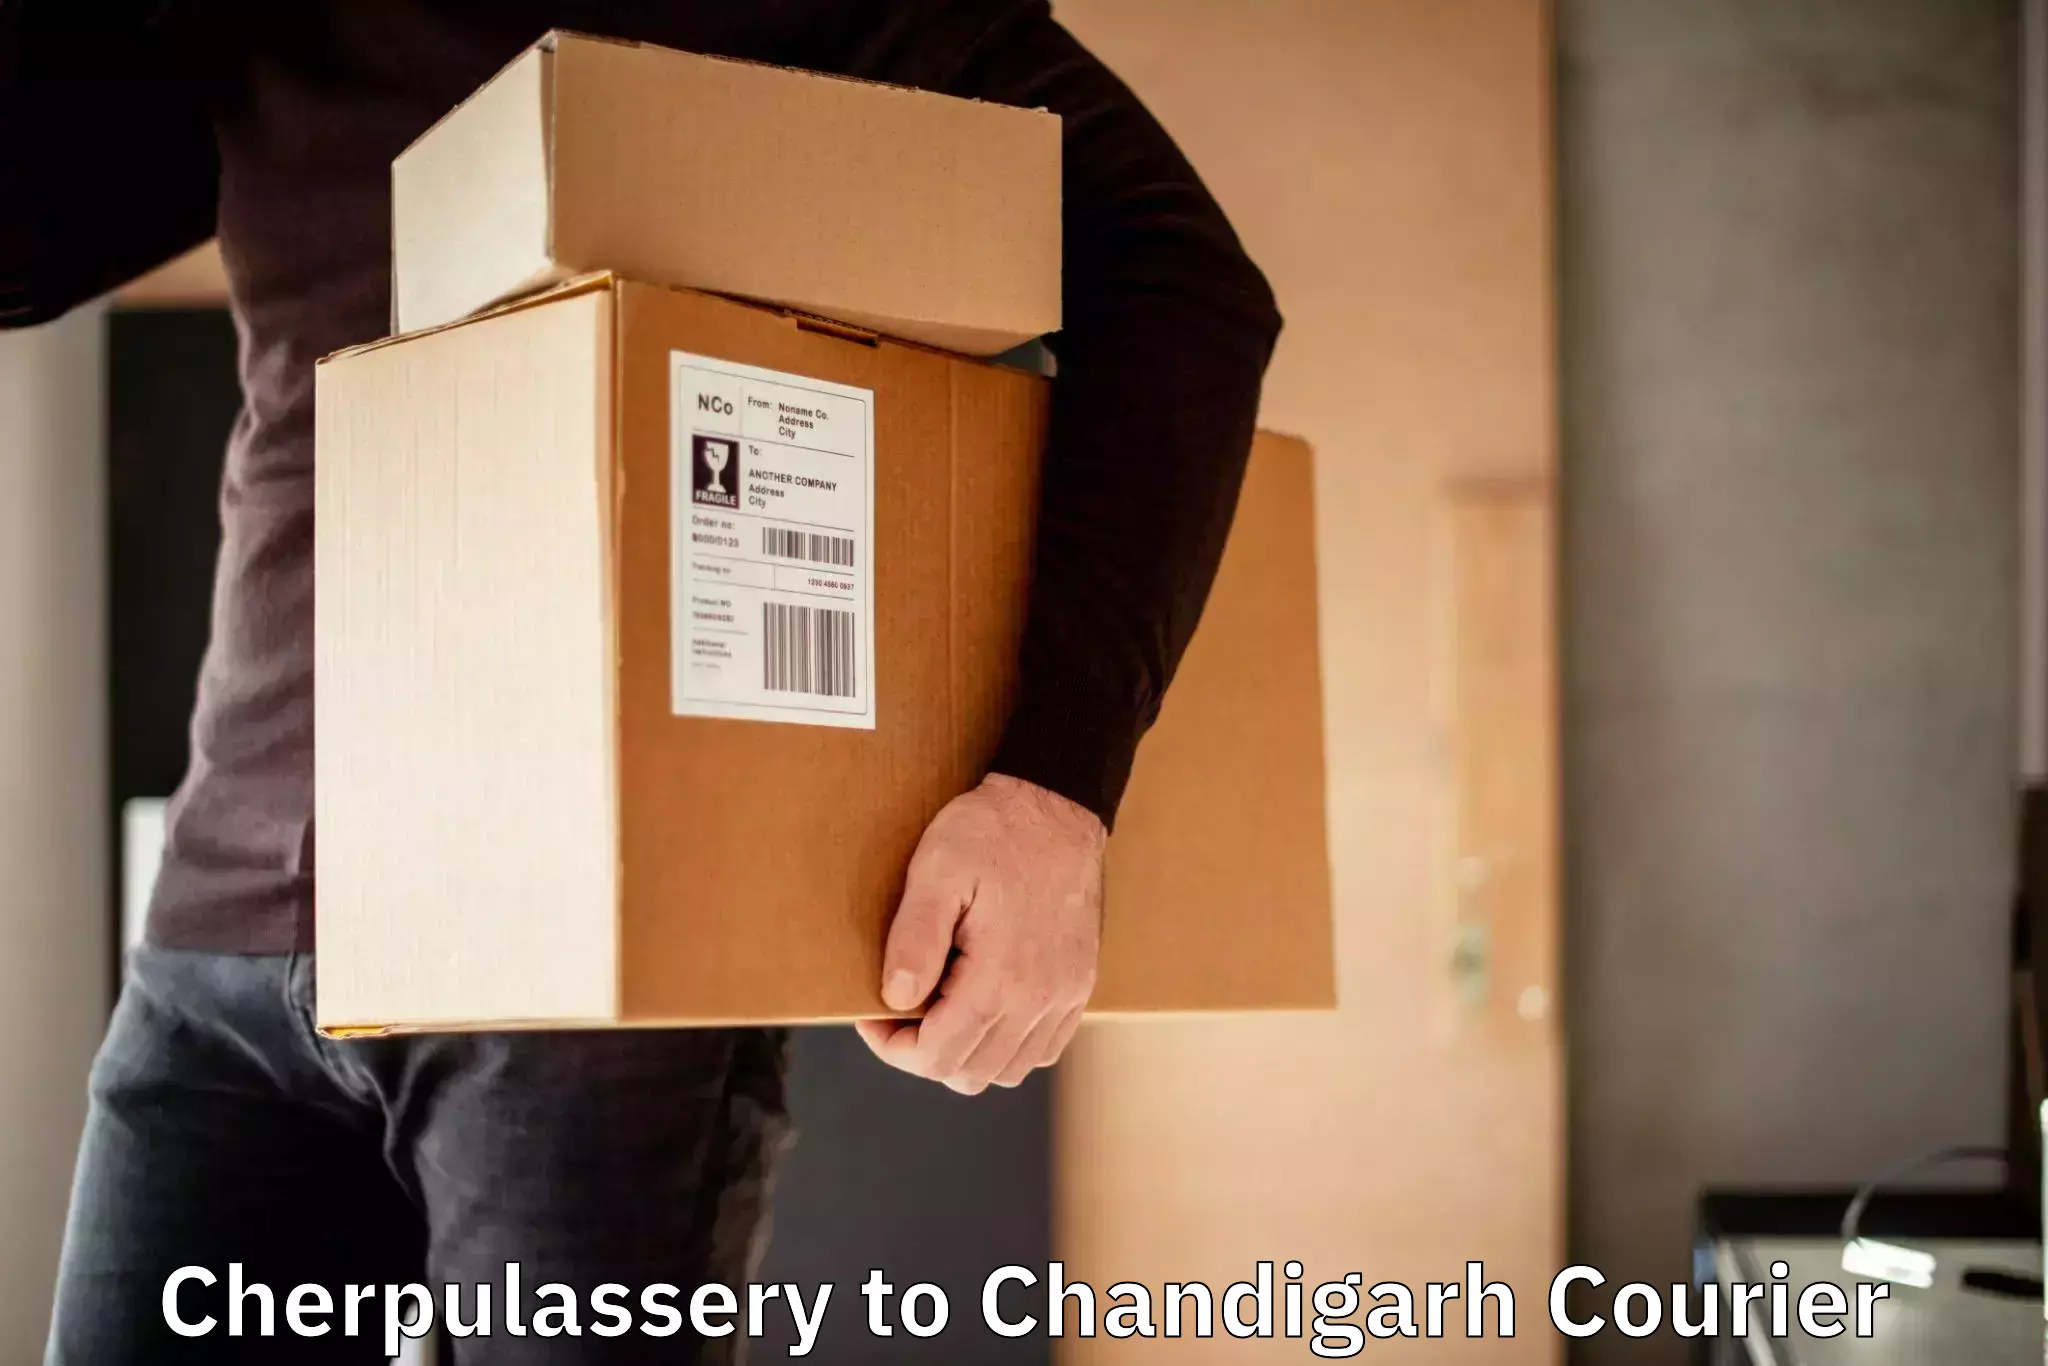 Courier service comparison Cherpulassery to Panjab University Chandigarh